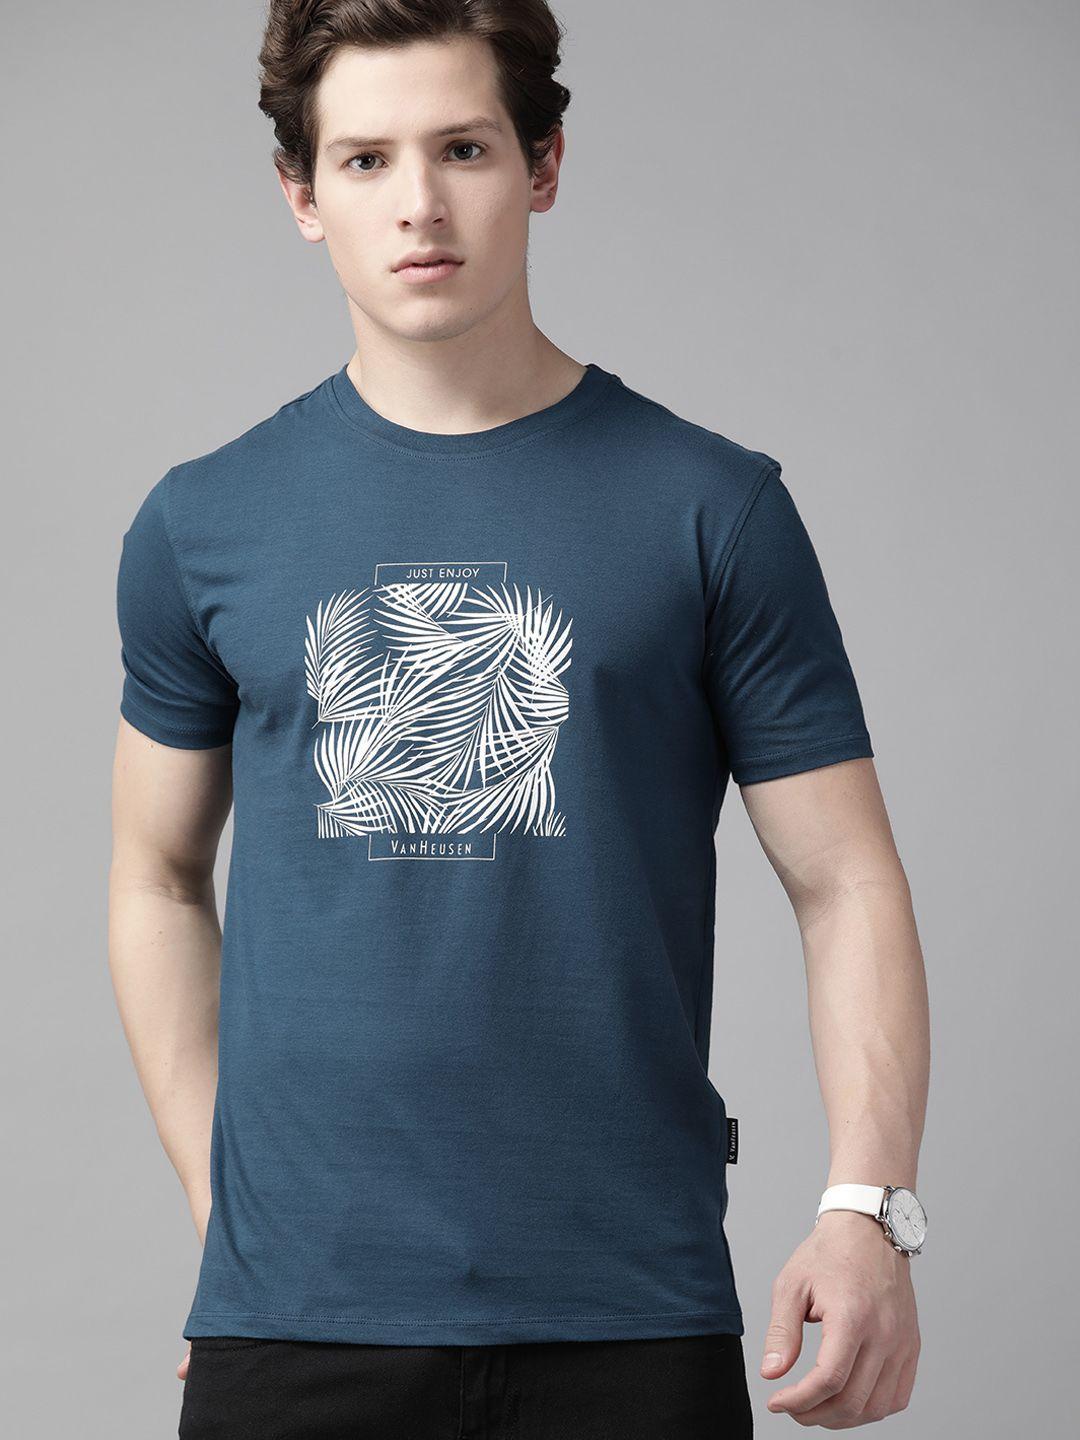 v dot men teal blue & white brand logo printed pure cotton t-shirt